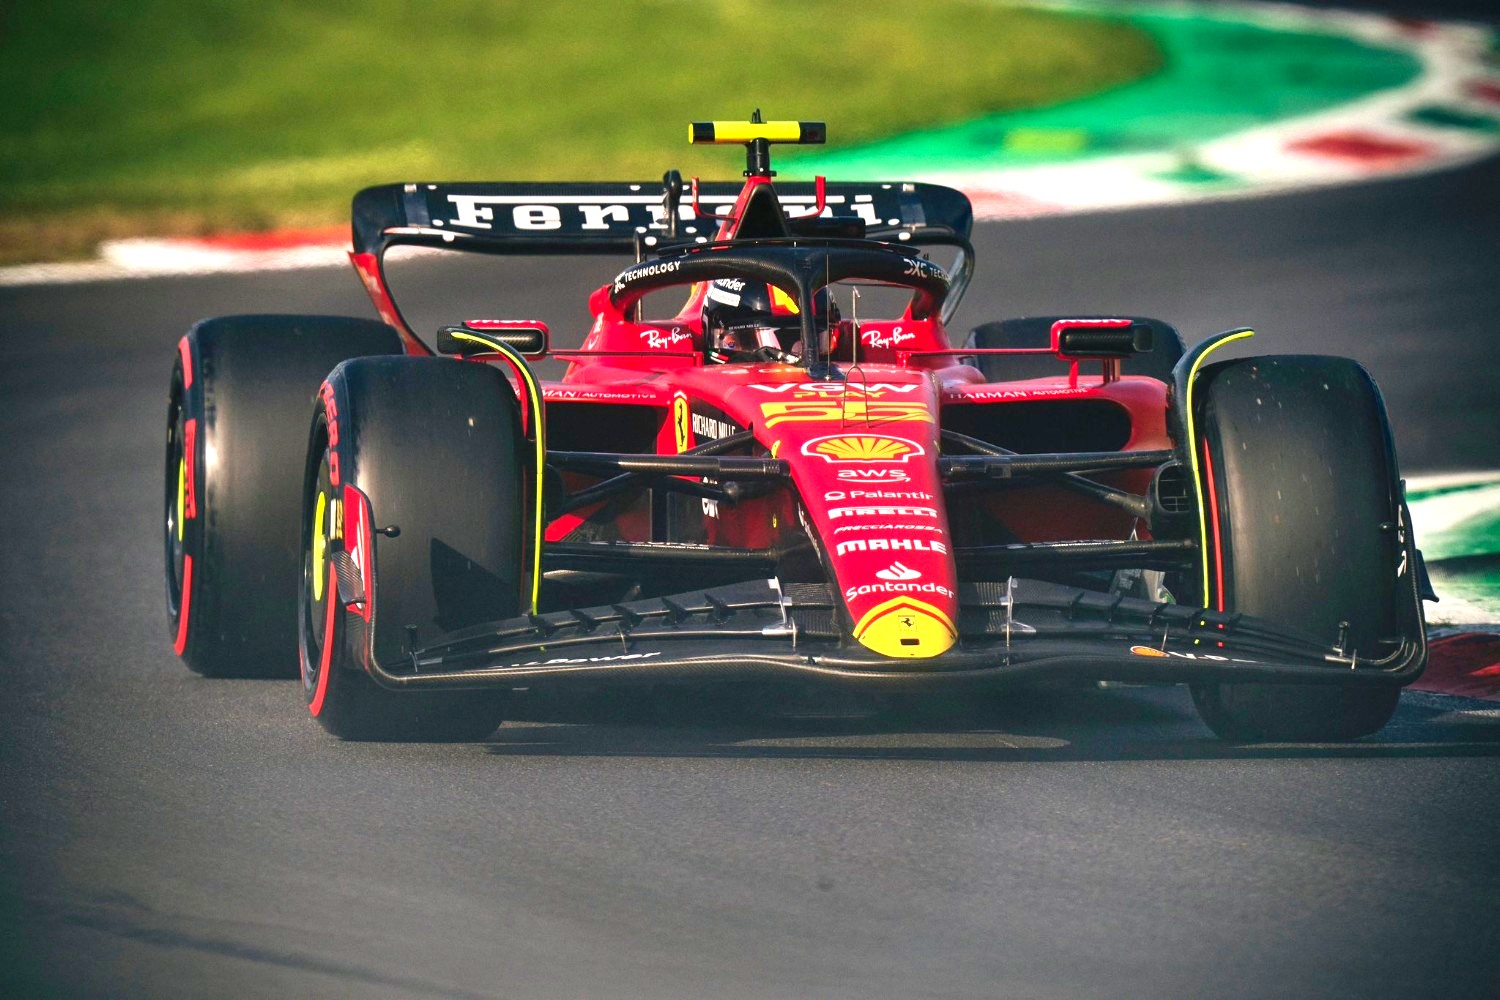 #55 Carlos Sainz, (ESP) Scuderia Ferrari during the Italian GP, Monza 31 August-3 September 2023 Formula 1 World championship 2023.